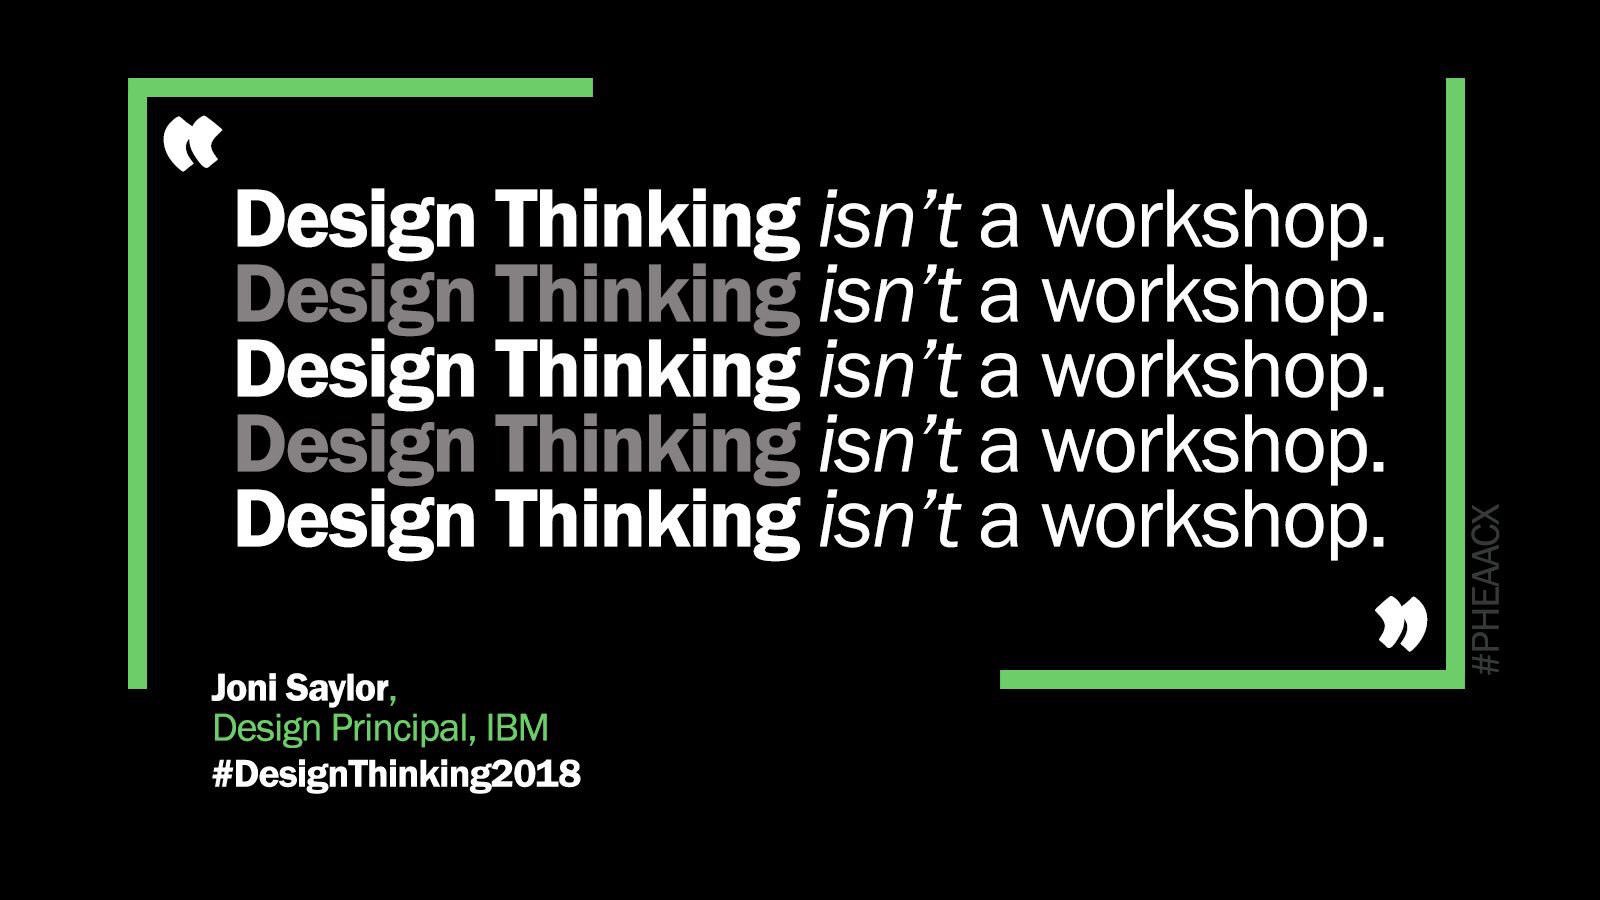 Design Thinking isn't a workshop